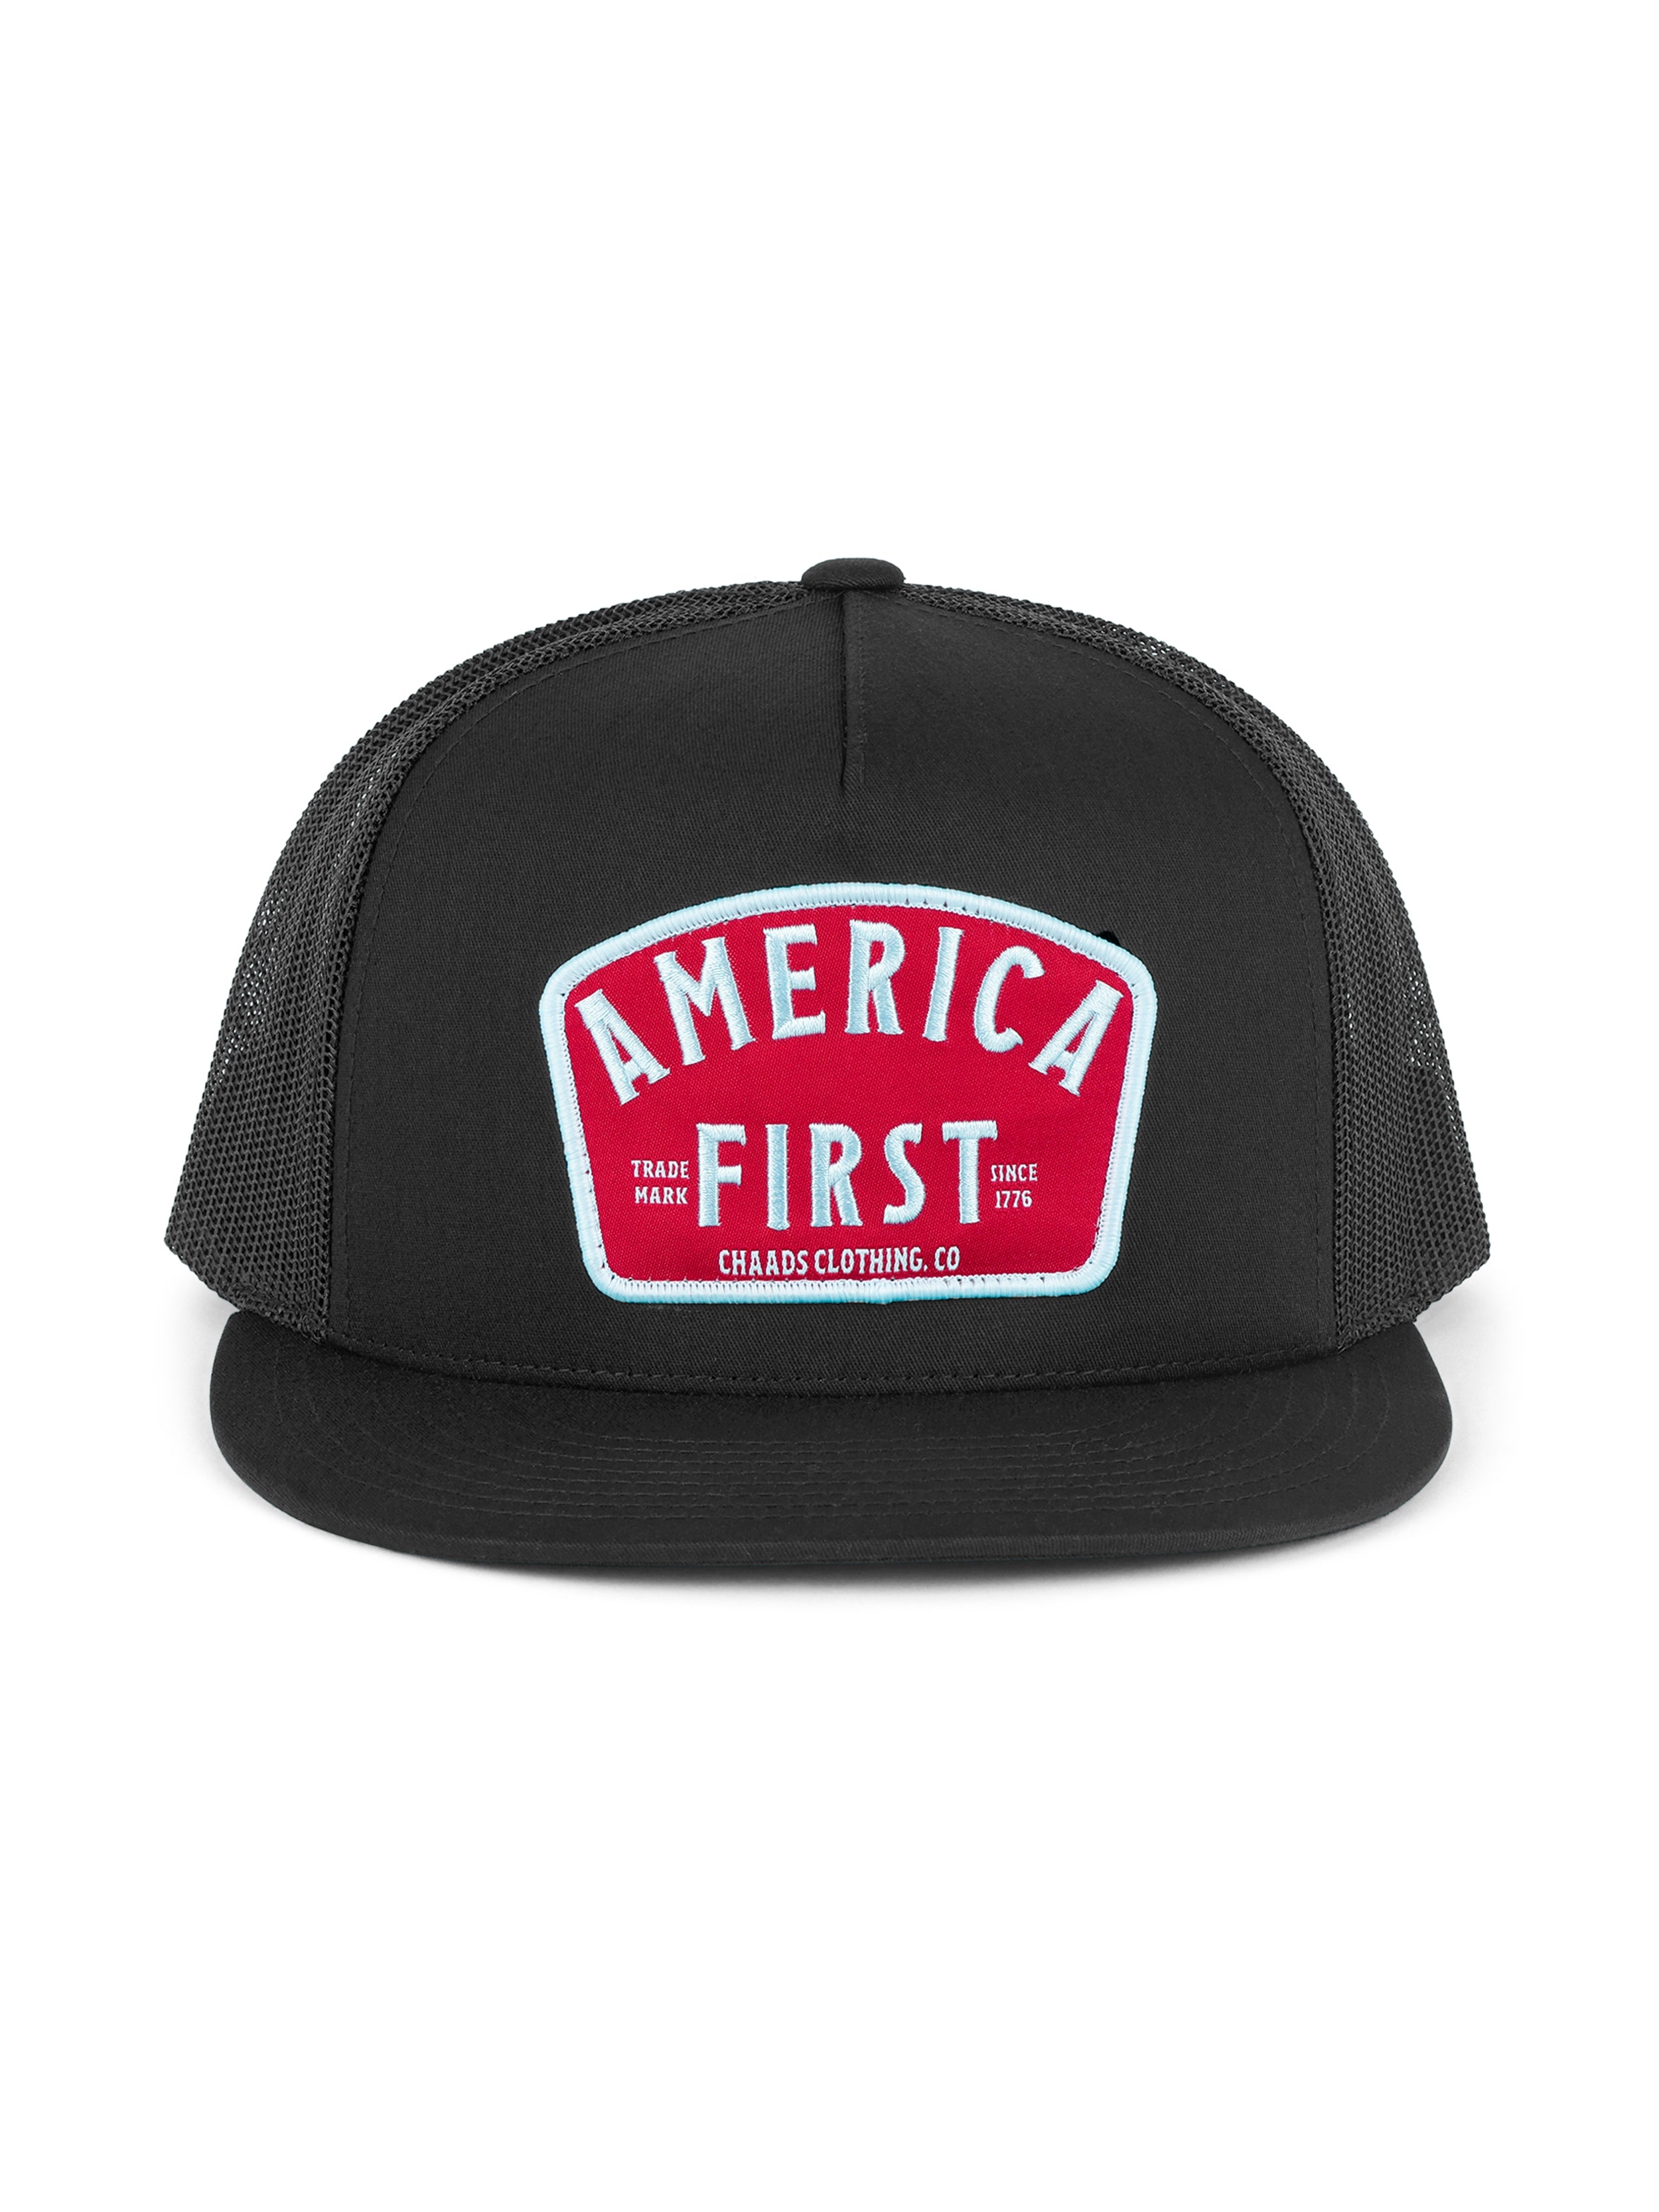 America First hat